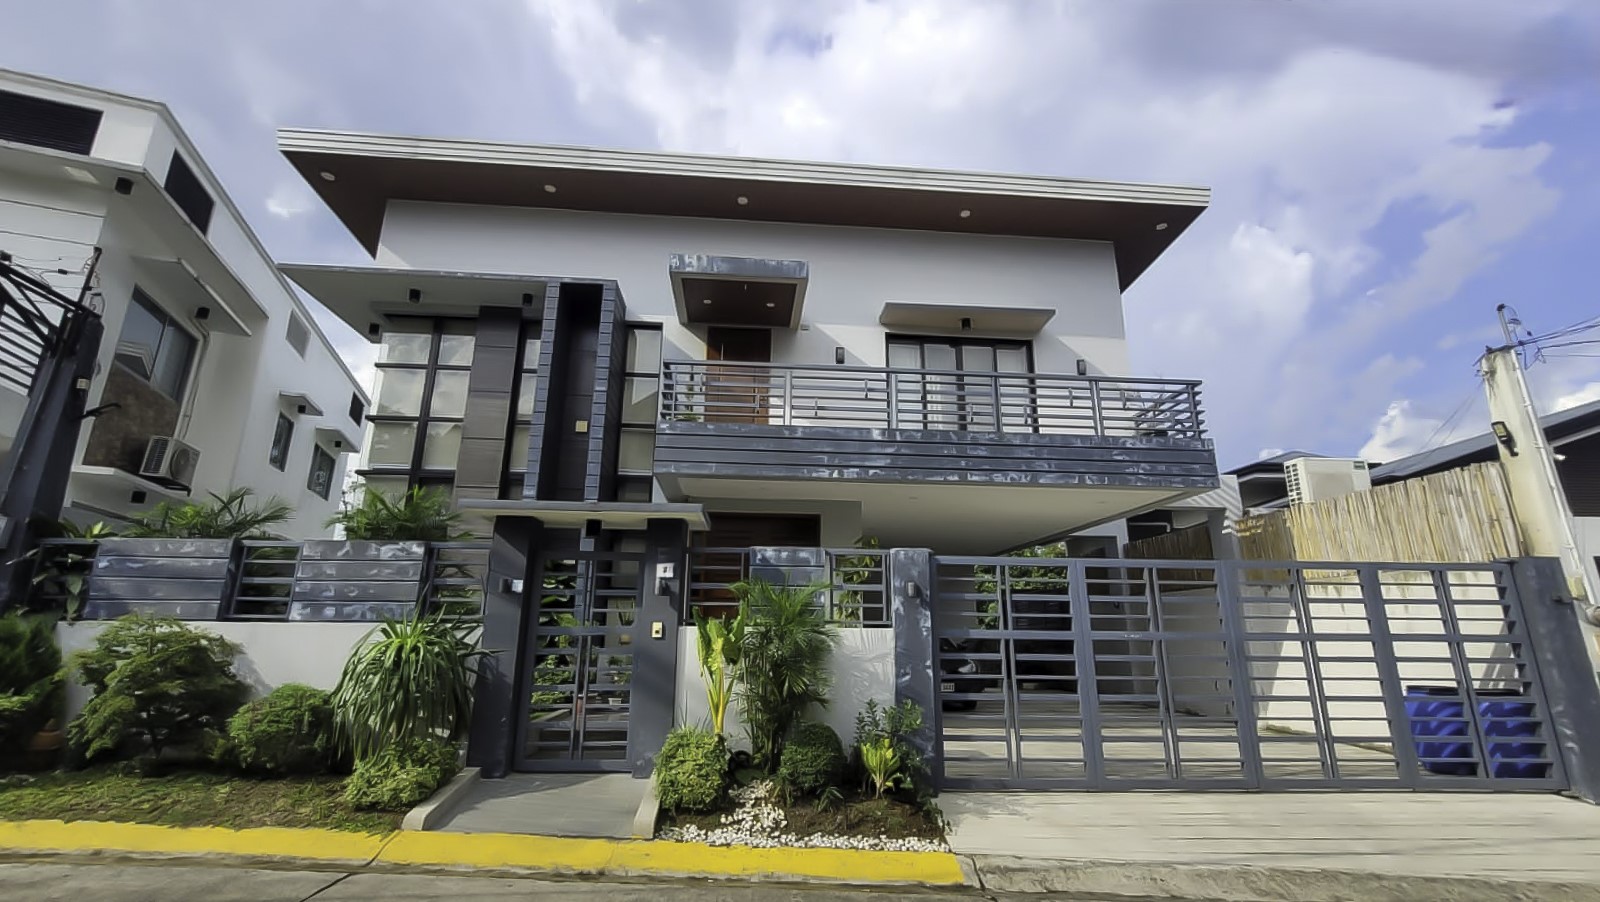 For Sale: 2 Storey House in Filinvest 2, Batasan Hills, Quezon City